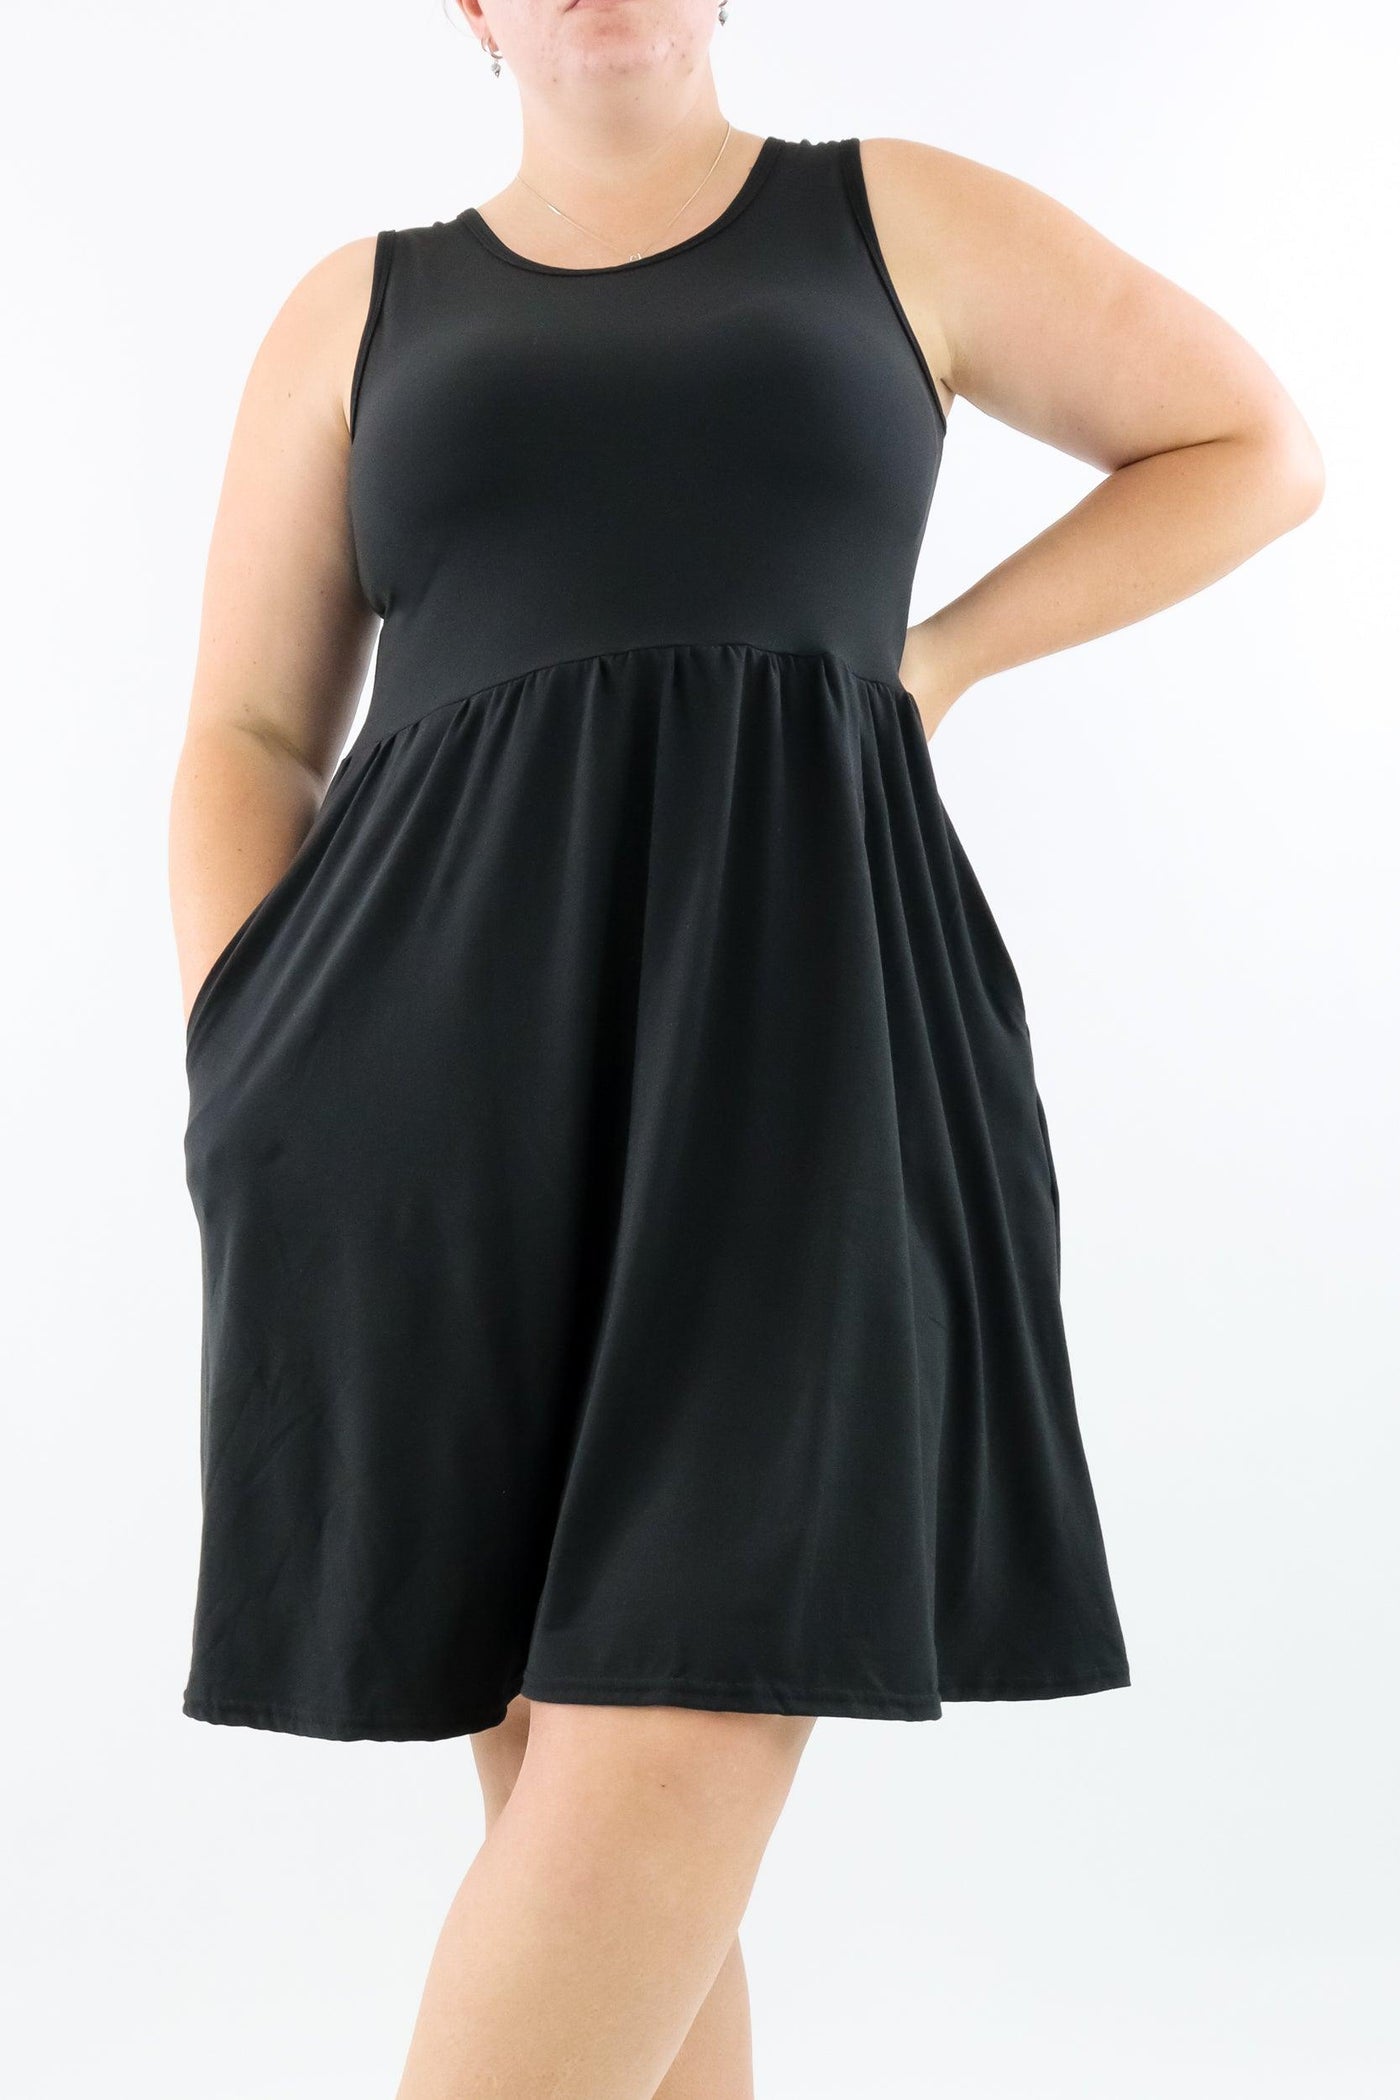 Black - Sleeveless Skater Dress - Knee Length - Side Pockets - Pawlie